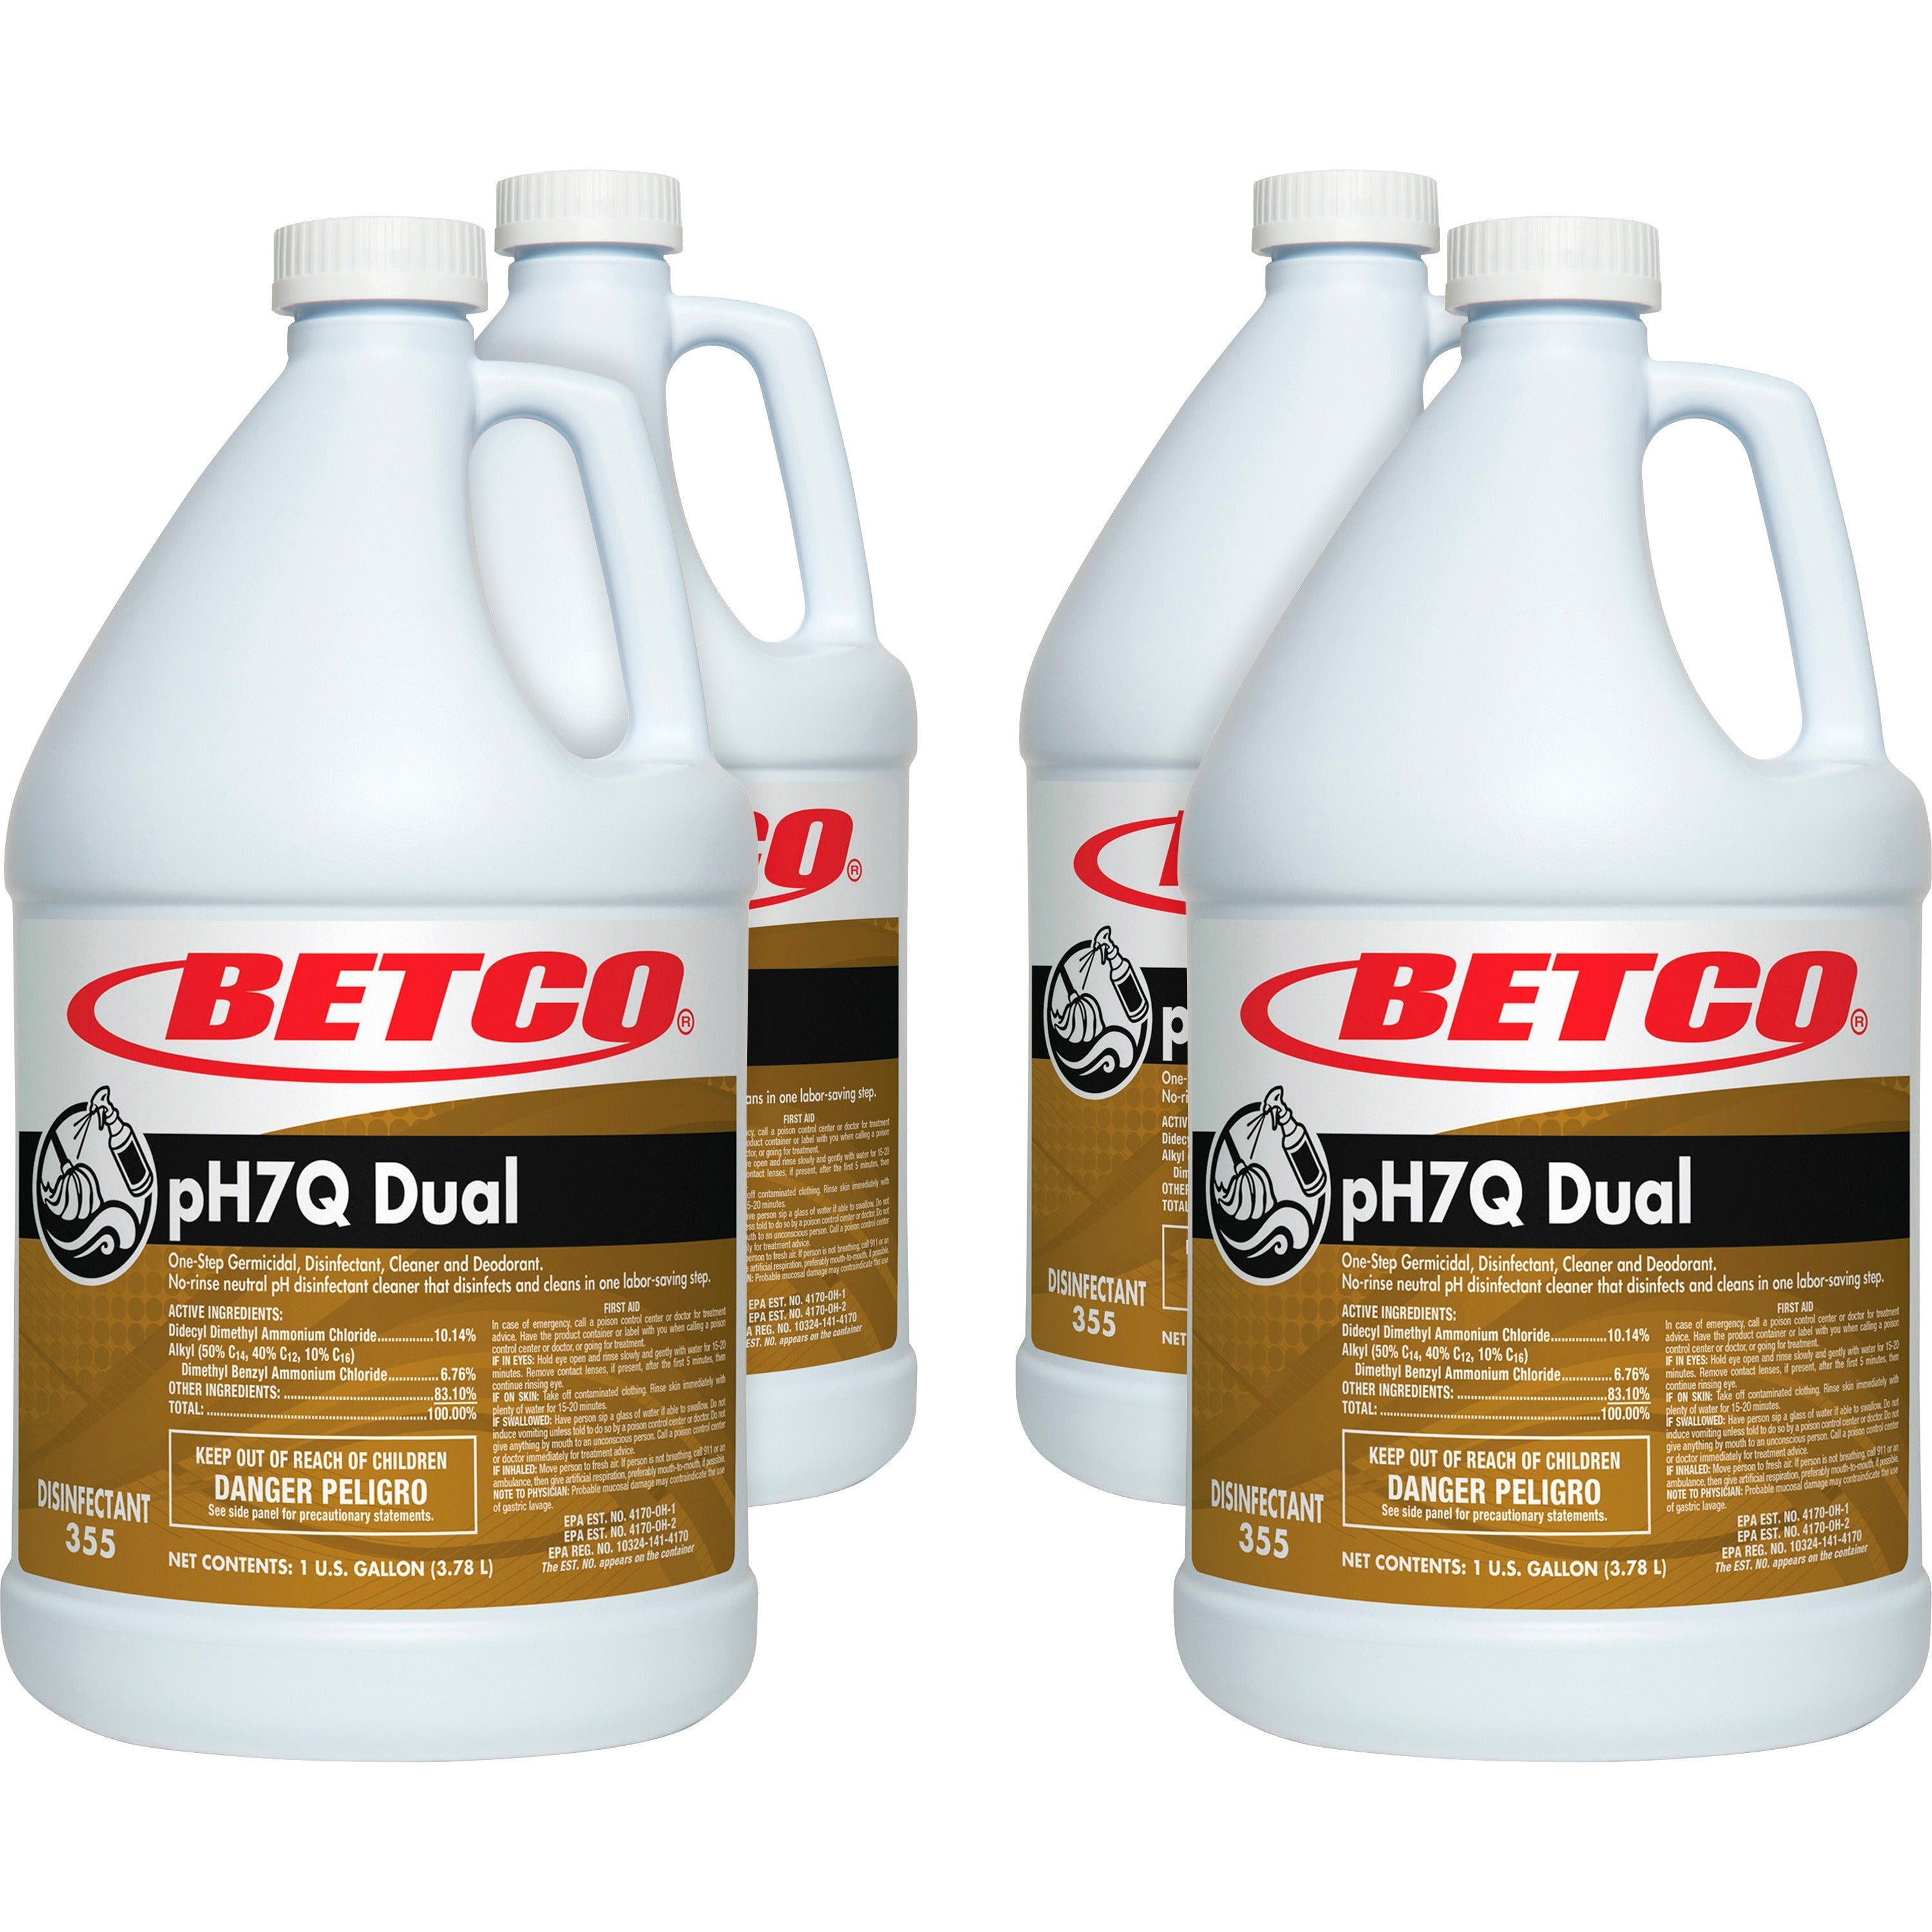 Betco pH7Q Dual Neutral Disinfectant Cleaner - Concentrate - 128 fl oz (4 quart) - Pleasant Lemon Scent - 4 / Carton - Deodorize, pH Neutral - Light Amber - 1